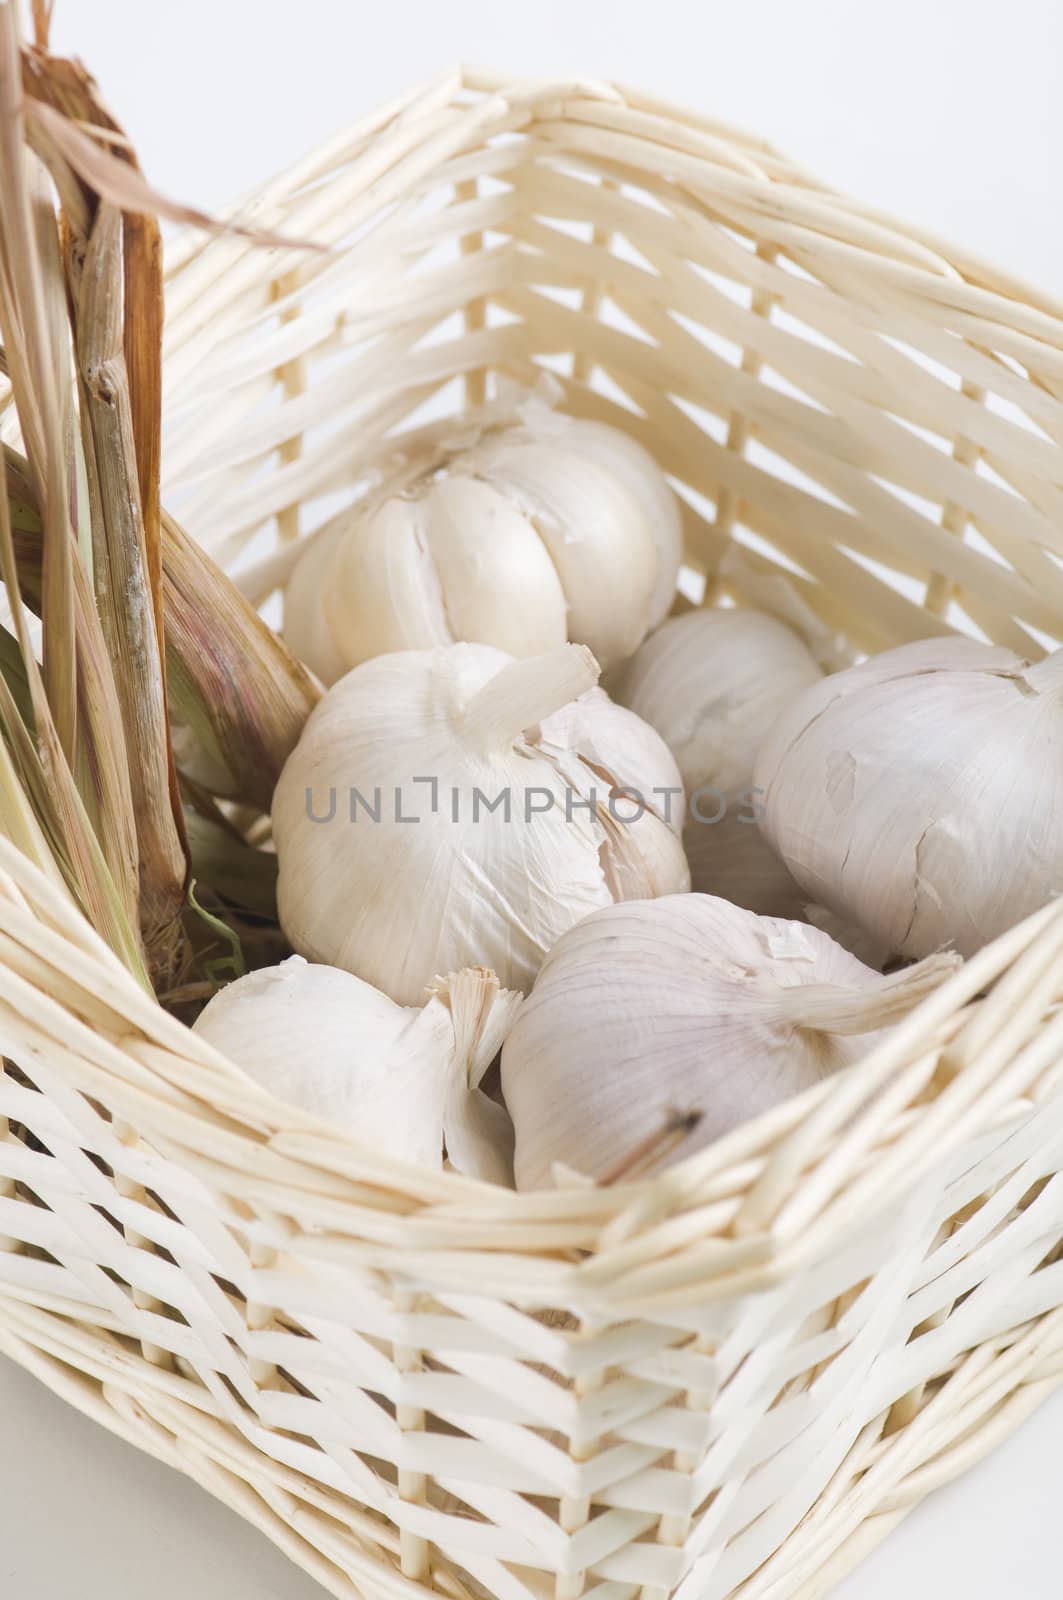 garlic with dried lemon grass inside a rattan basket